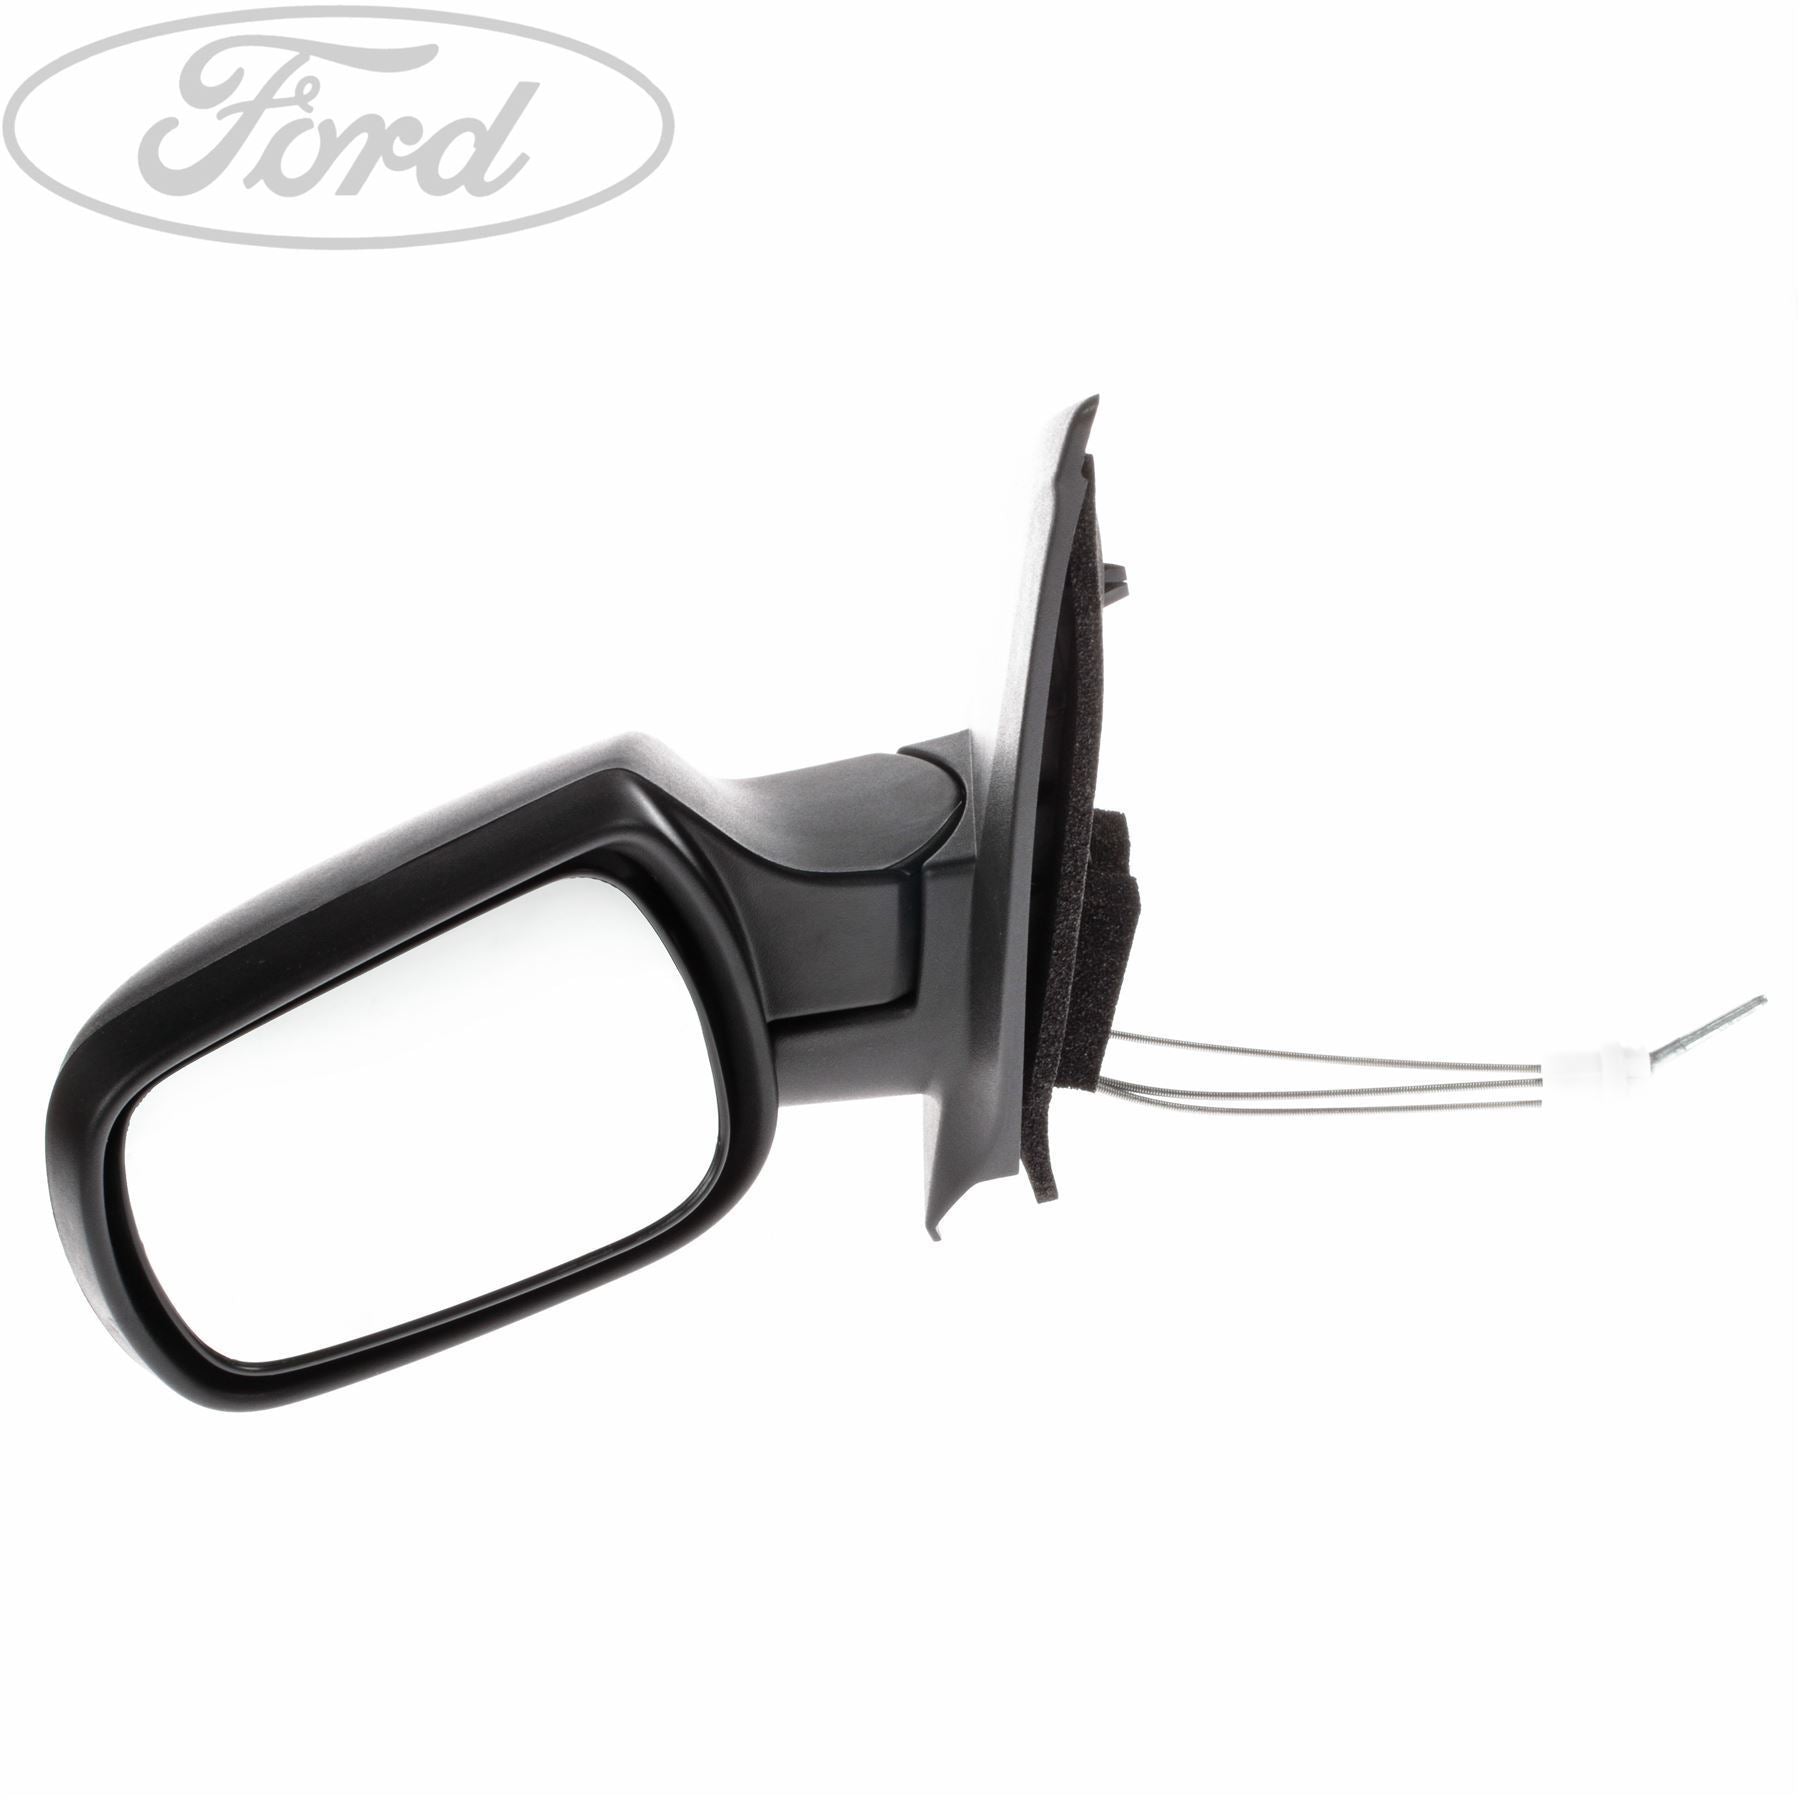 Ford ESCORT Spiegel Aussenspiegel links Manual C7L2A online kaufen